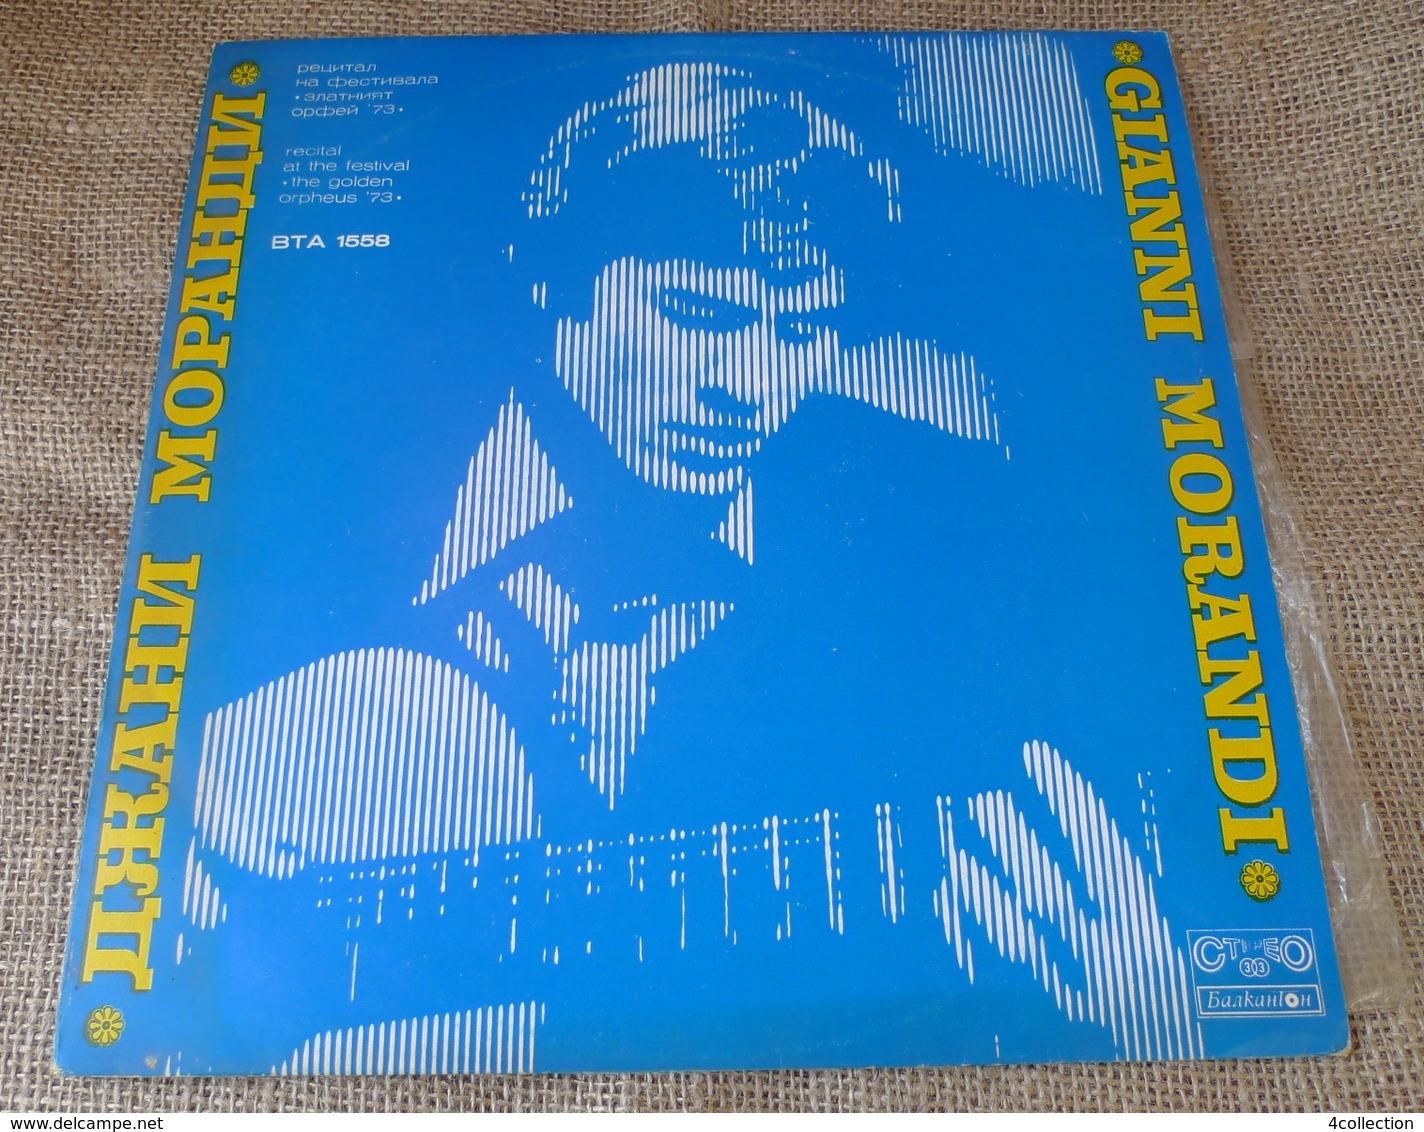 Vinyl Records Stereo 33 Rpm LP Gianni Morandi Recital At The Festival The Golden Orpheus 1973 Bulgaria Balkanton - Andere & Zonder Classificatie